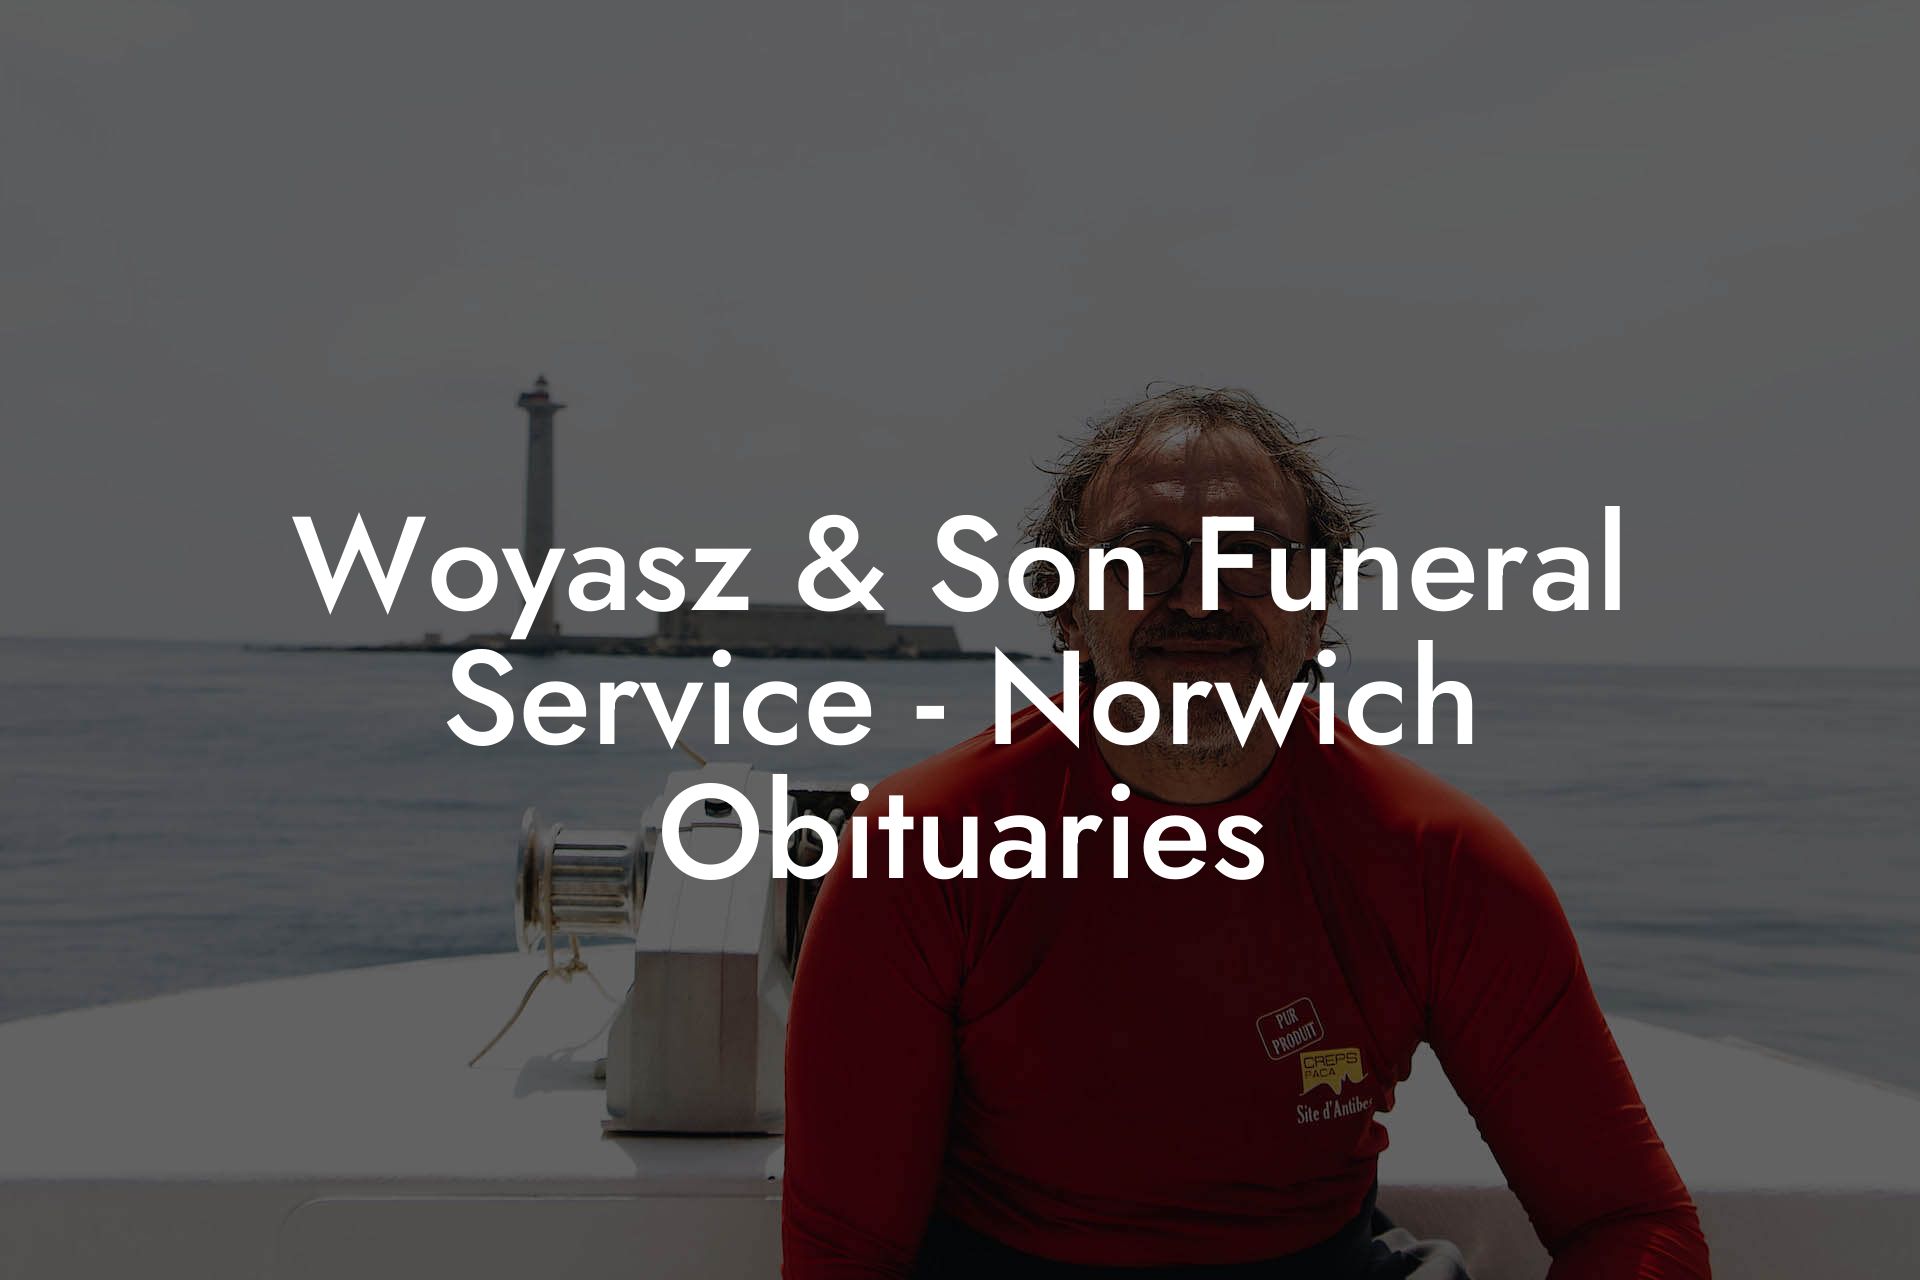 Woyasz & Son Funeral Service - Norwich Obituaries